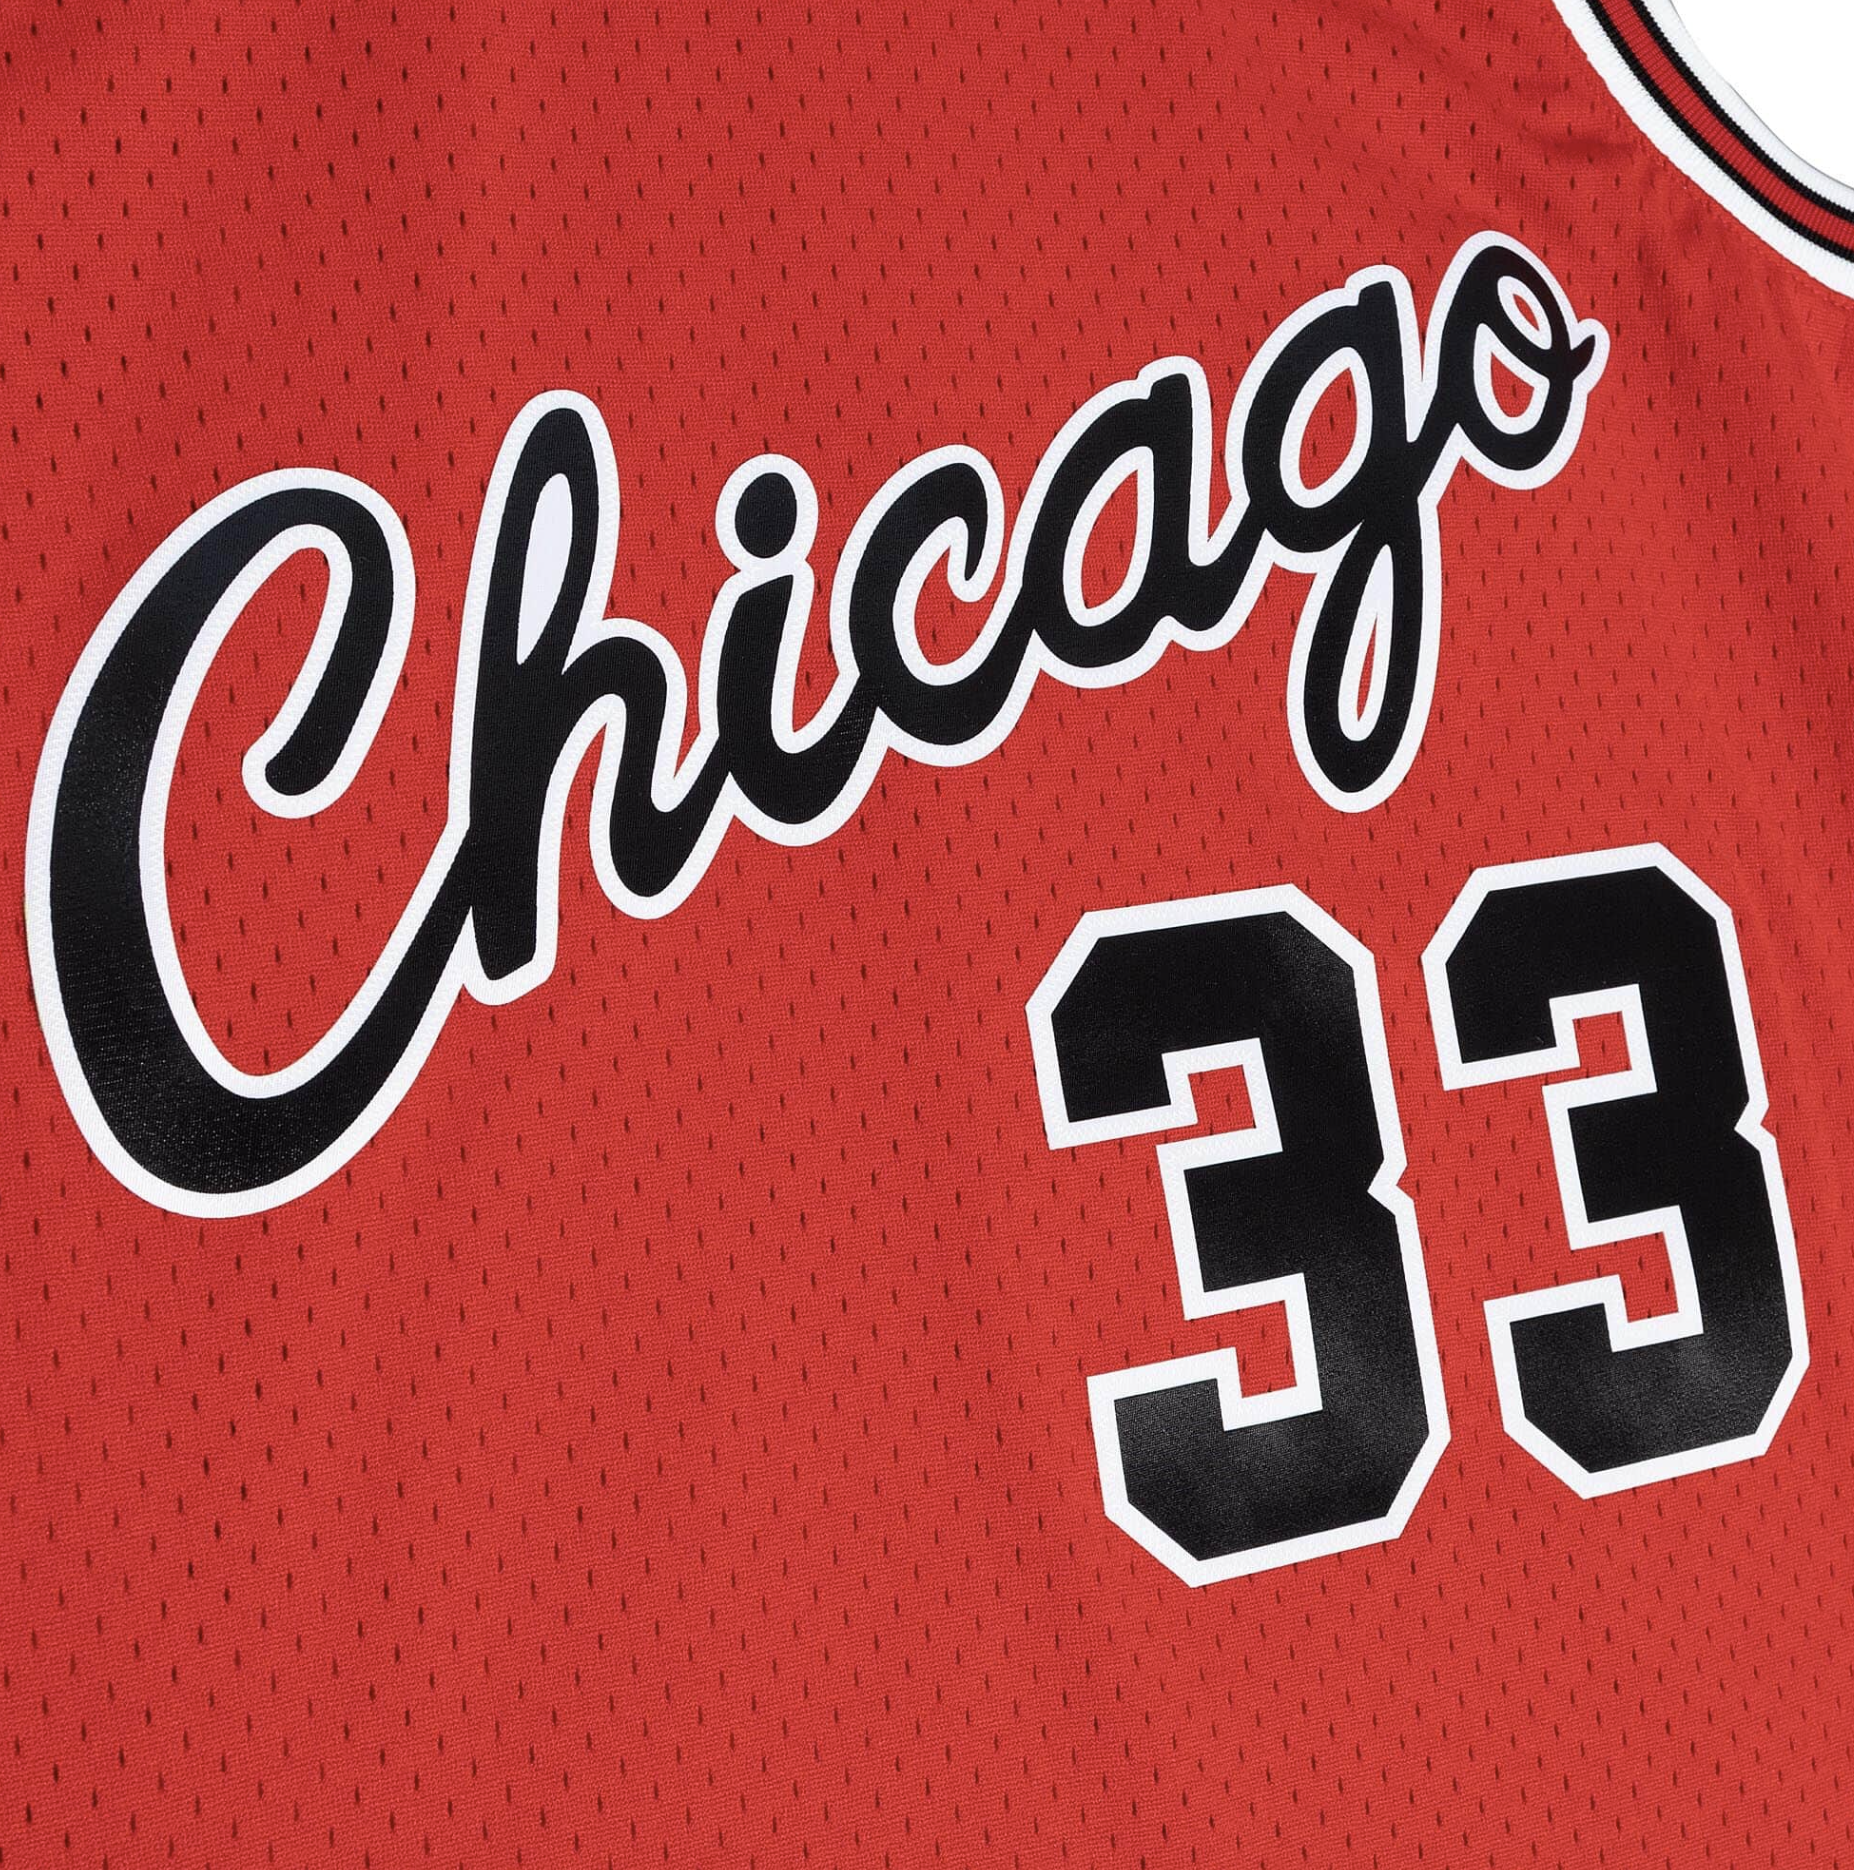 Mitchell & Ness Chicago Bulls - Scottie Pippen Men’s Jersey